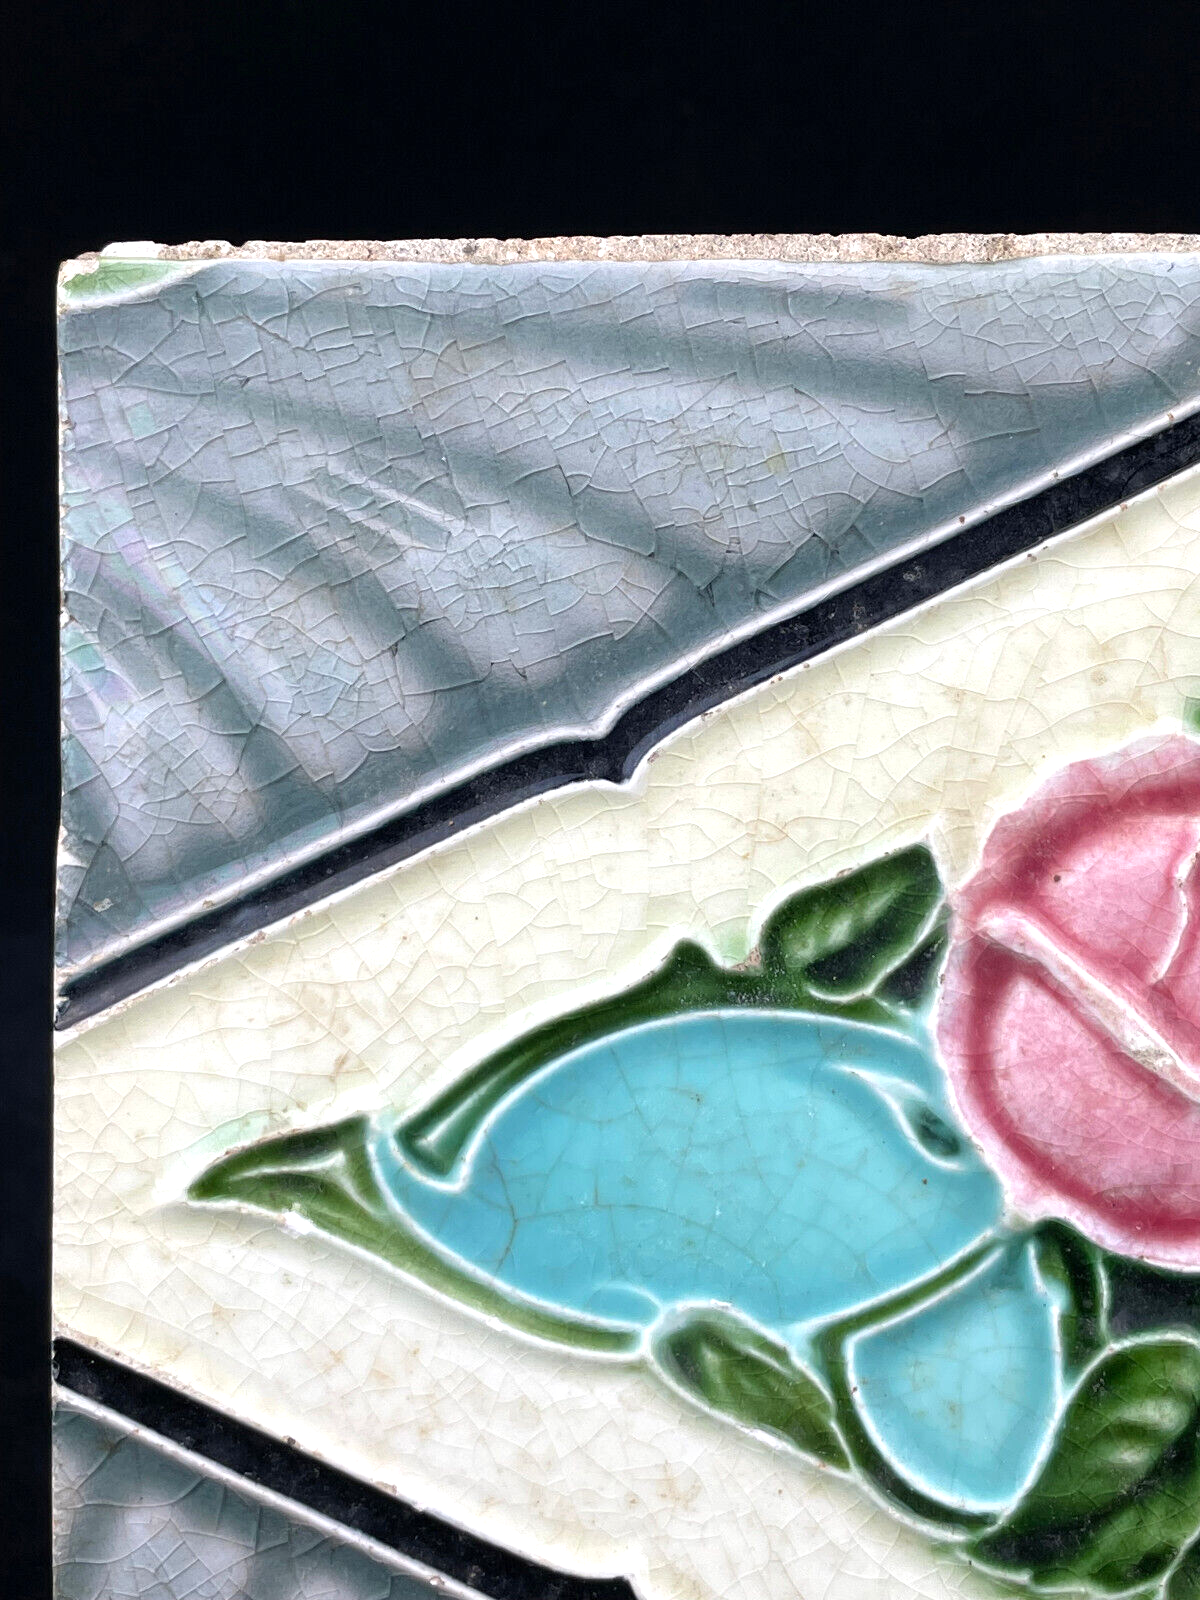 Antique Art Nouveau Era Majolica Ceramic Art Tile with Rose Geometric Patterns